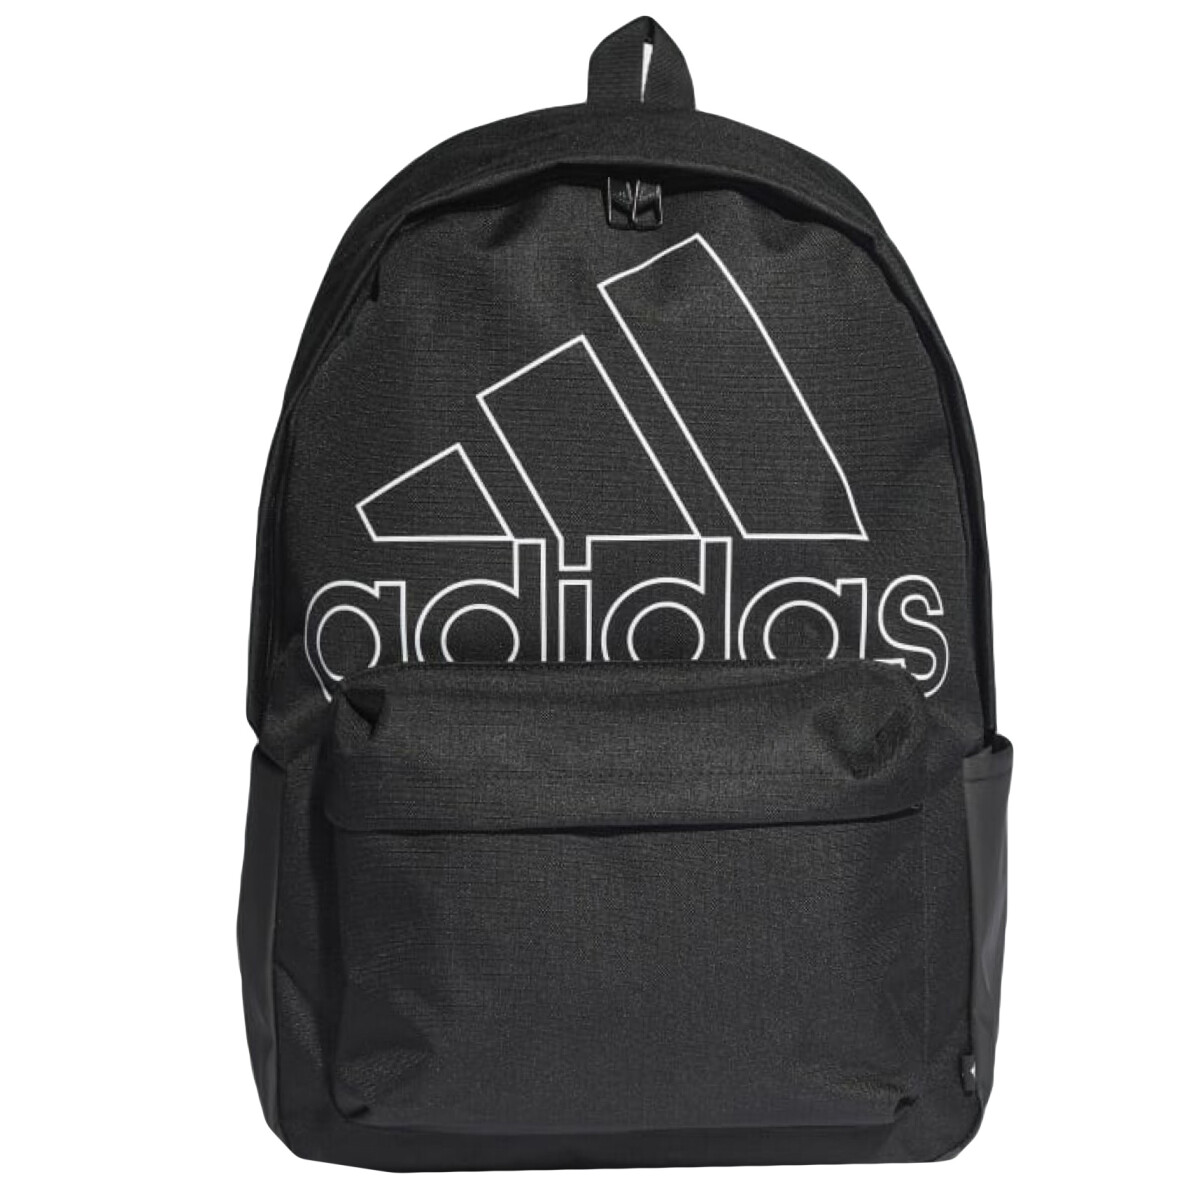 Mochila Backpack Bos Adidas - Negro/Blanco 